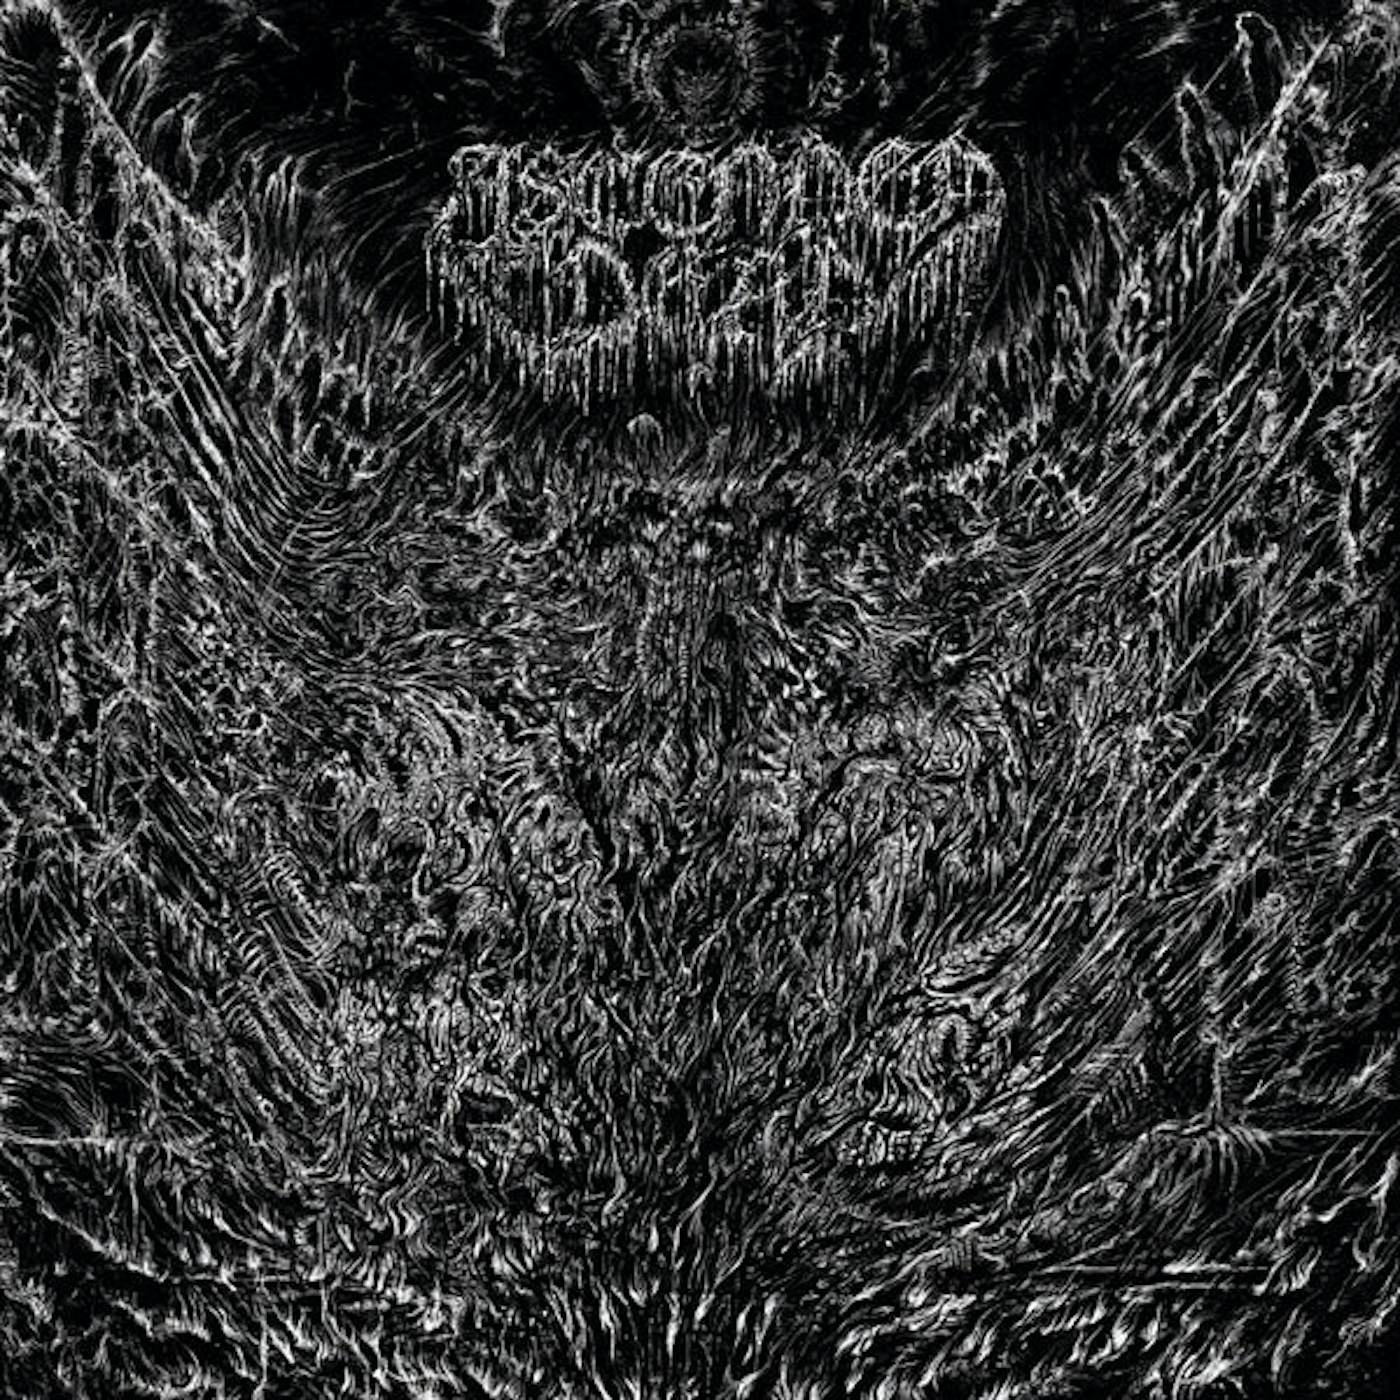 Ascended Dead LP - Evenfall Of The Apocalypse (Vinyl)